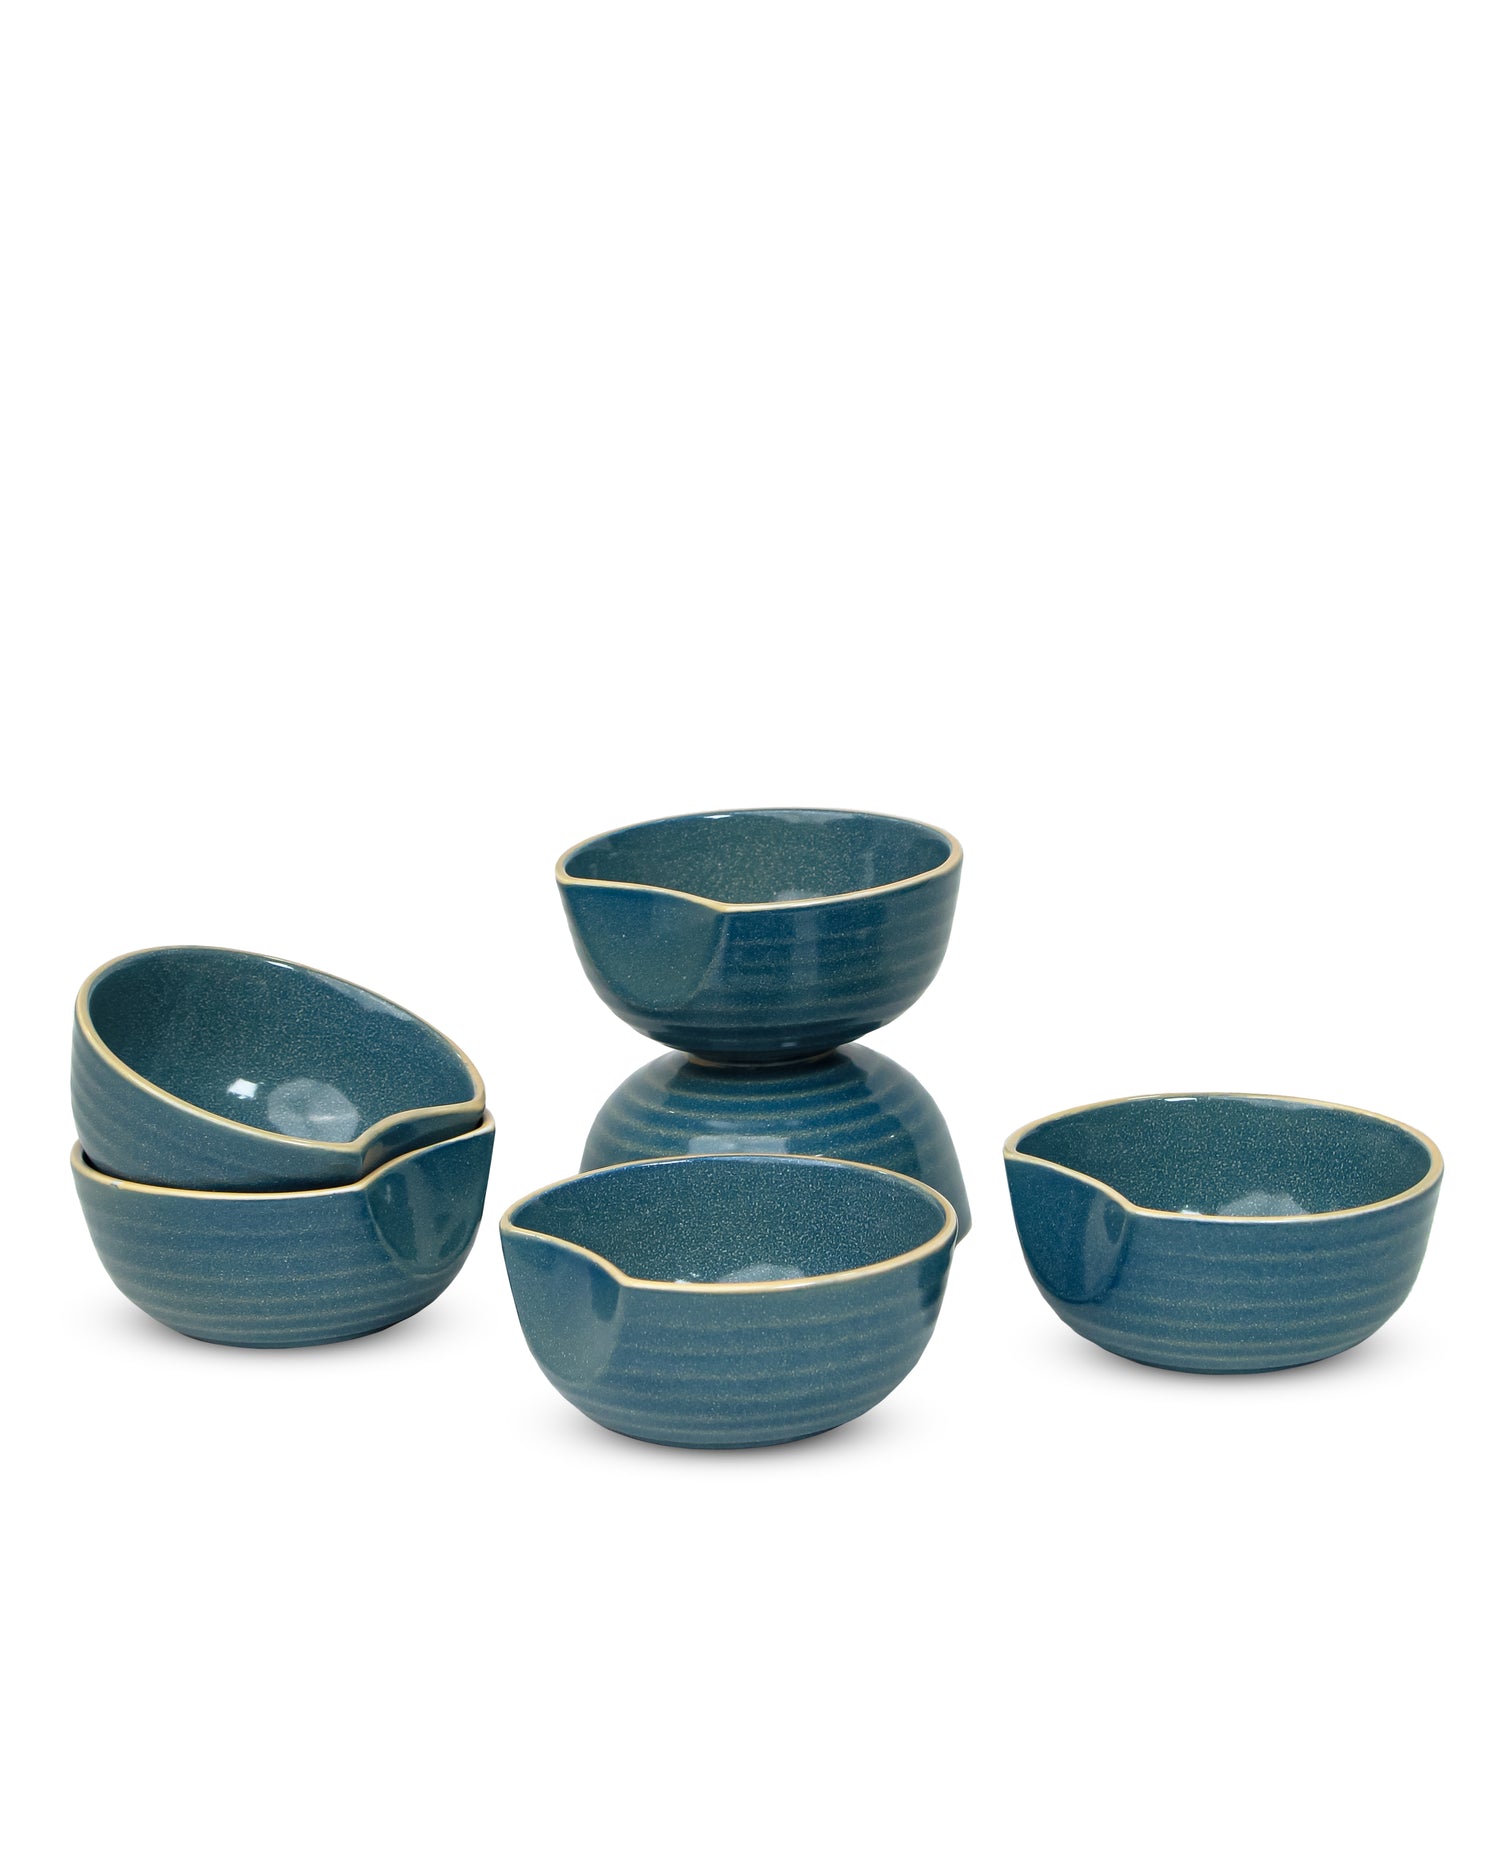 Medium teal || Organic thumb bowl - Set of 6